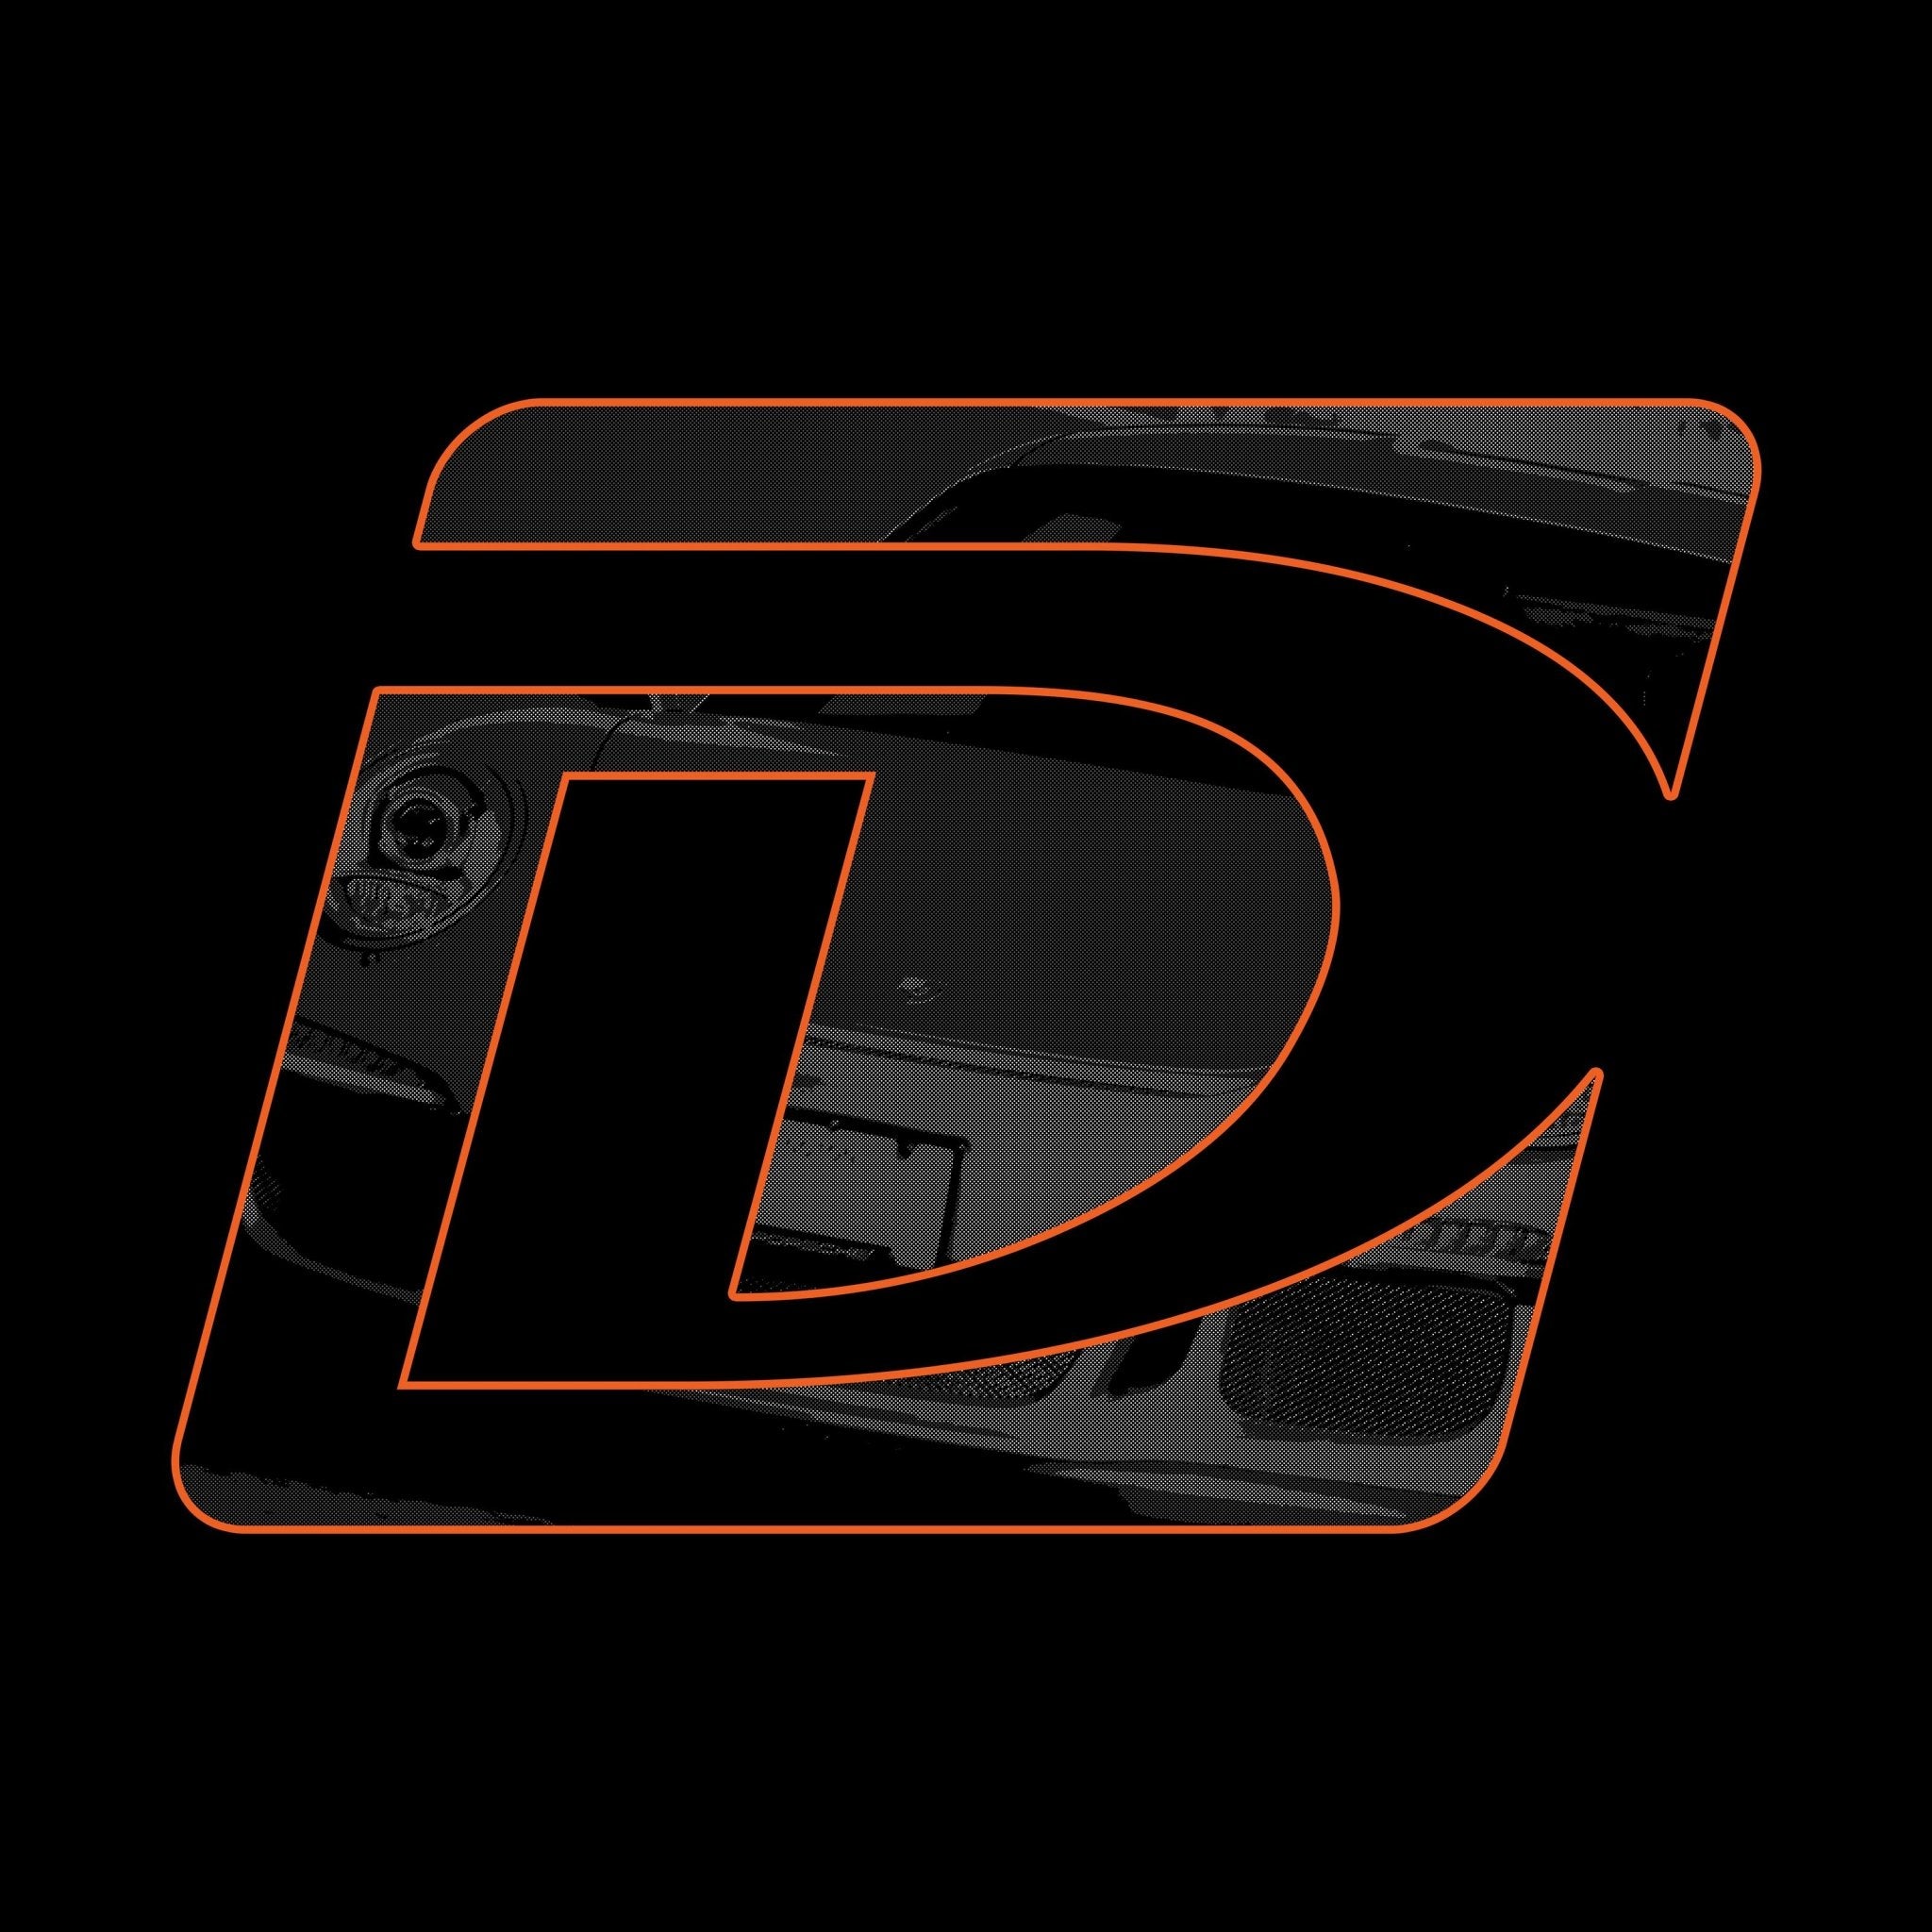 Dundon Motorsports - Big D T-shirt - Dundon Motorsports